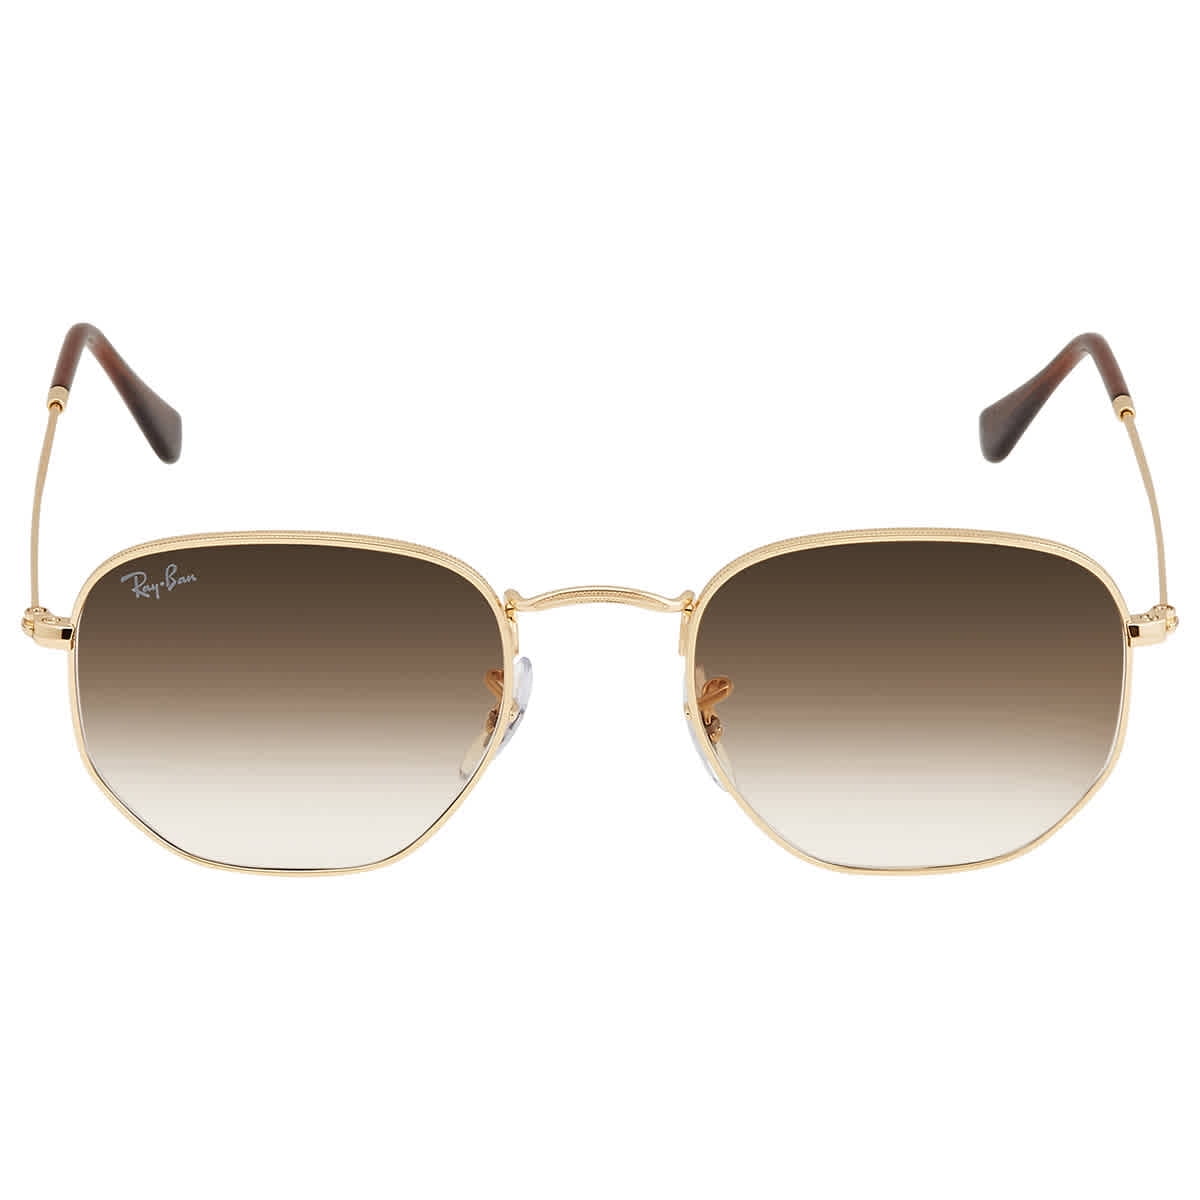 BELLA CHAMPAGNE -Polarised Sunglasses with Gradient Lens